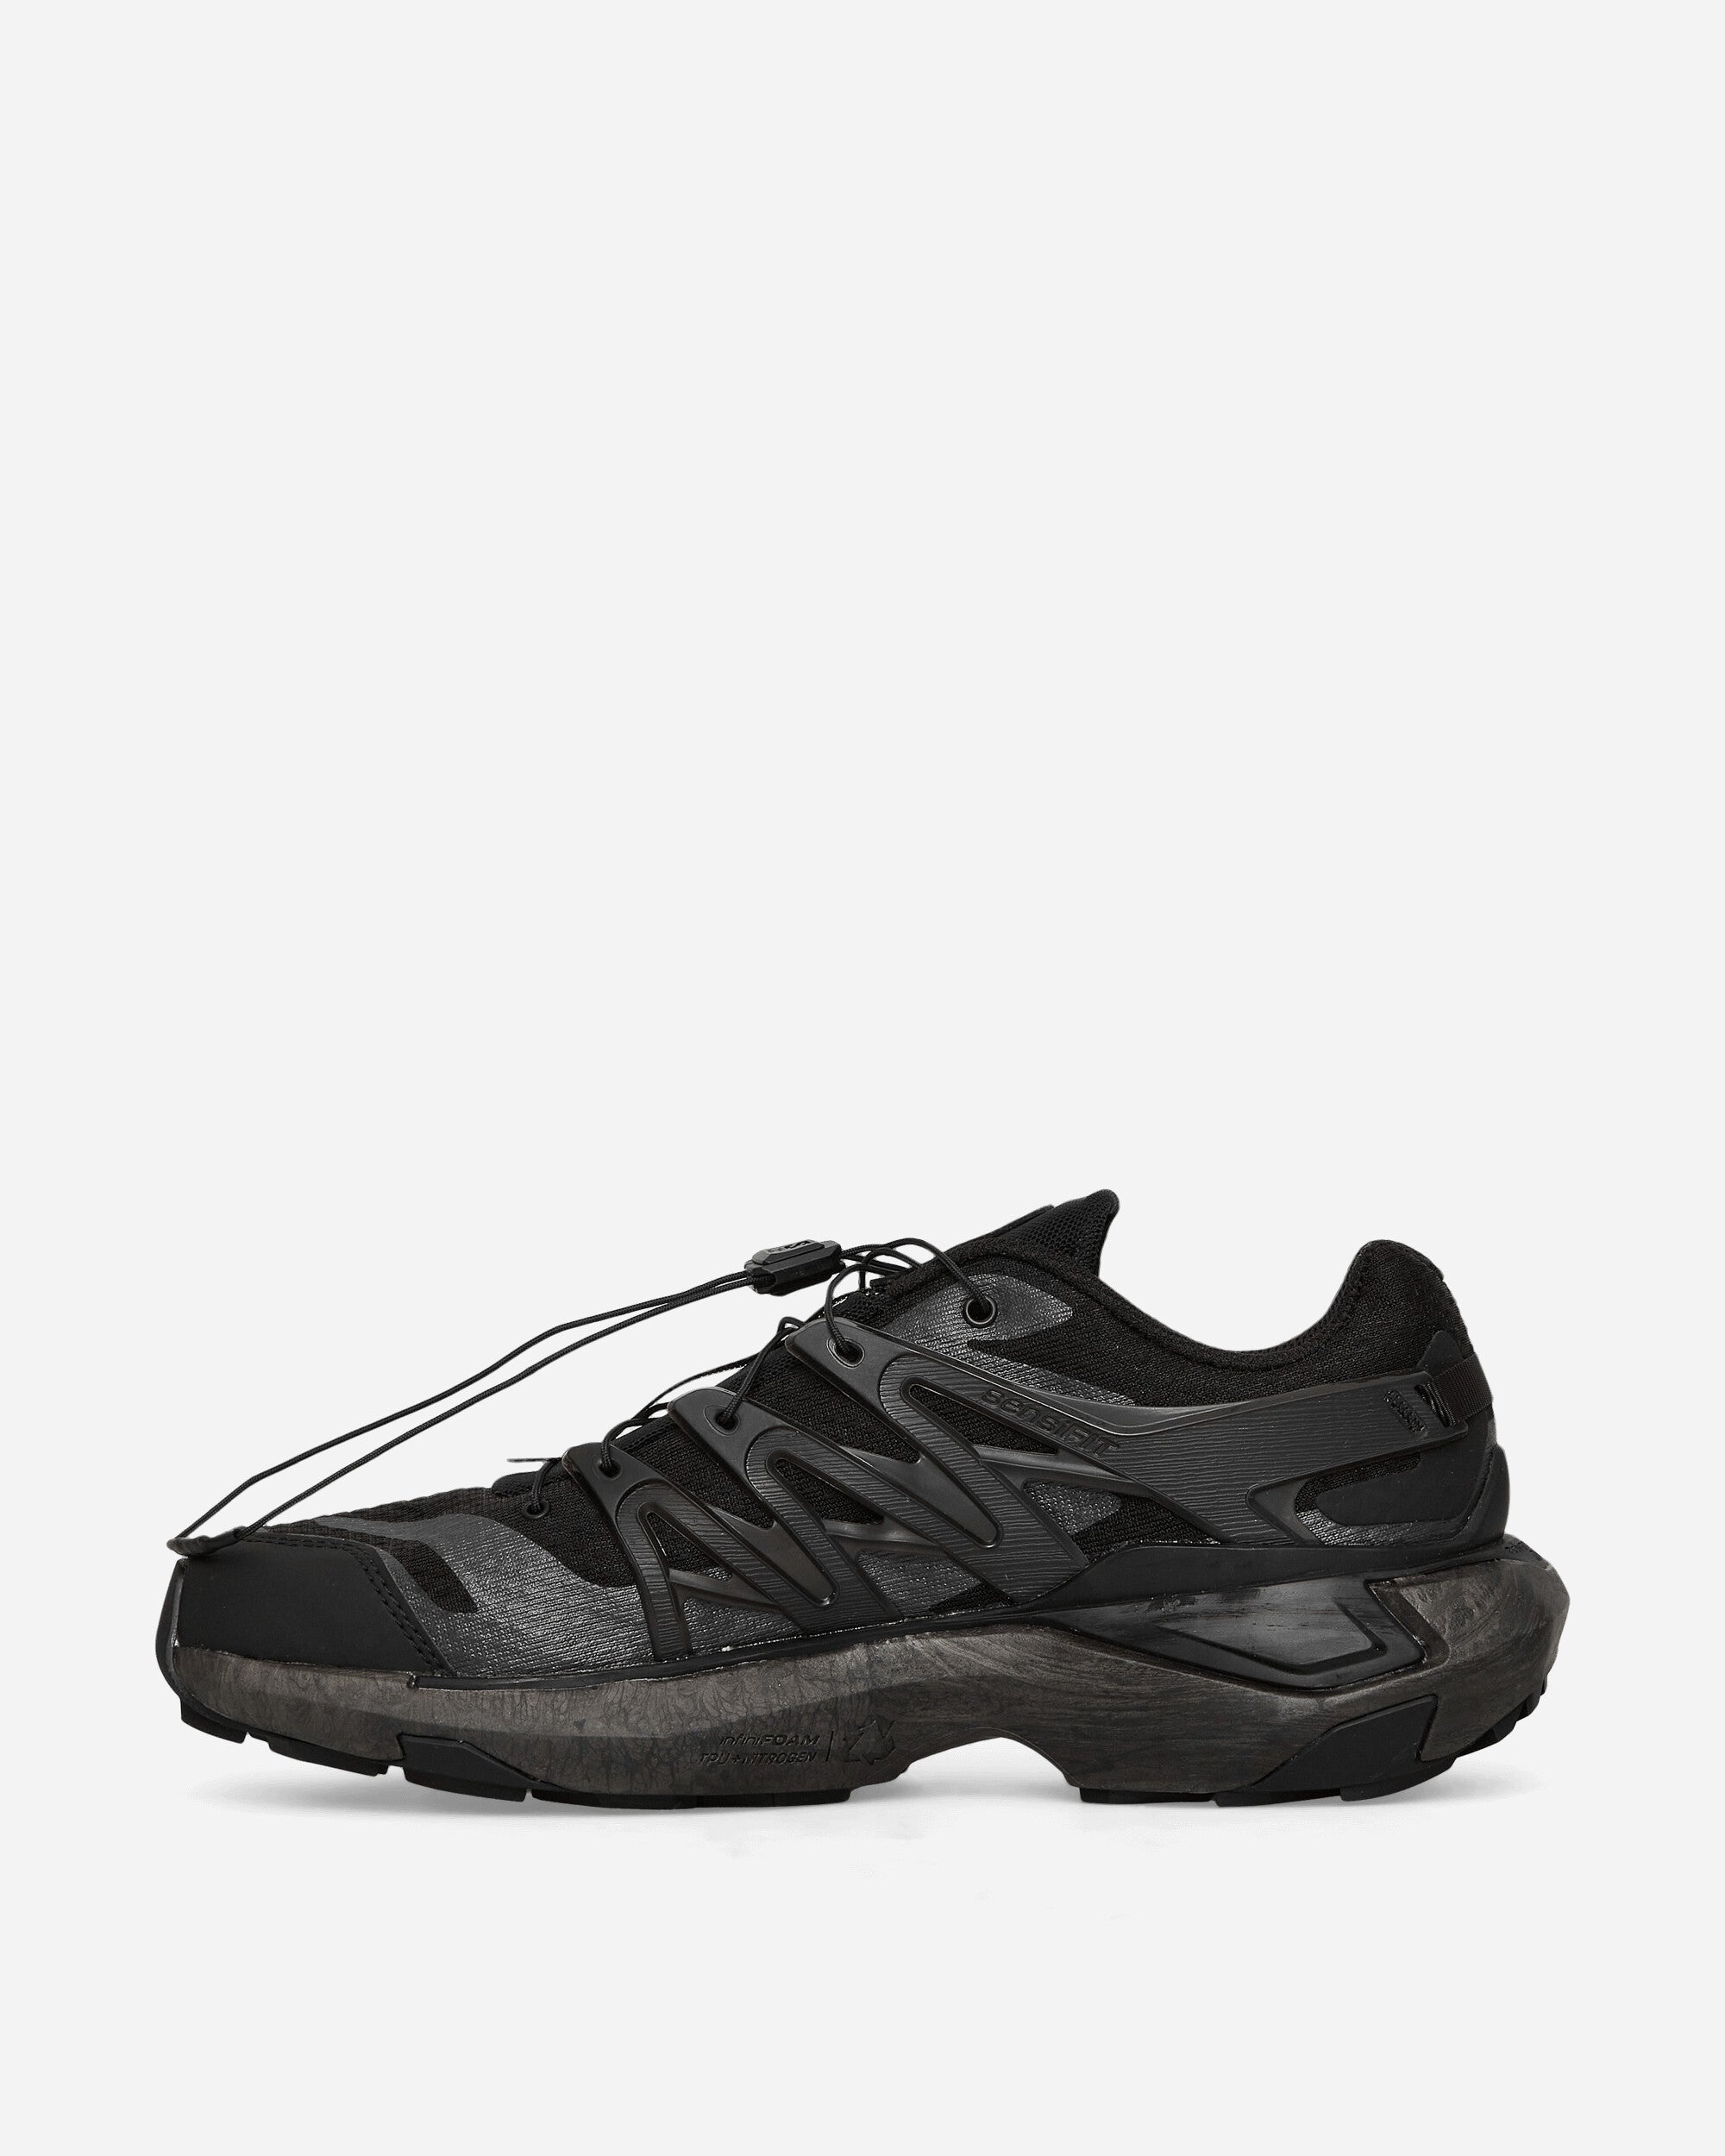 XT PU.RE Advanced Sneakers Black / Black / Phantom - 3